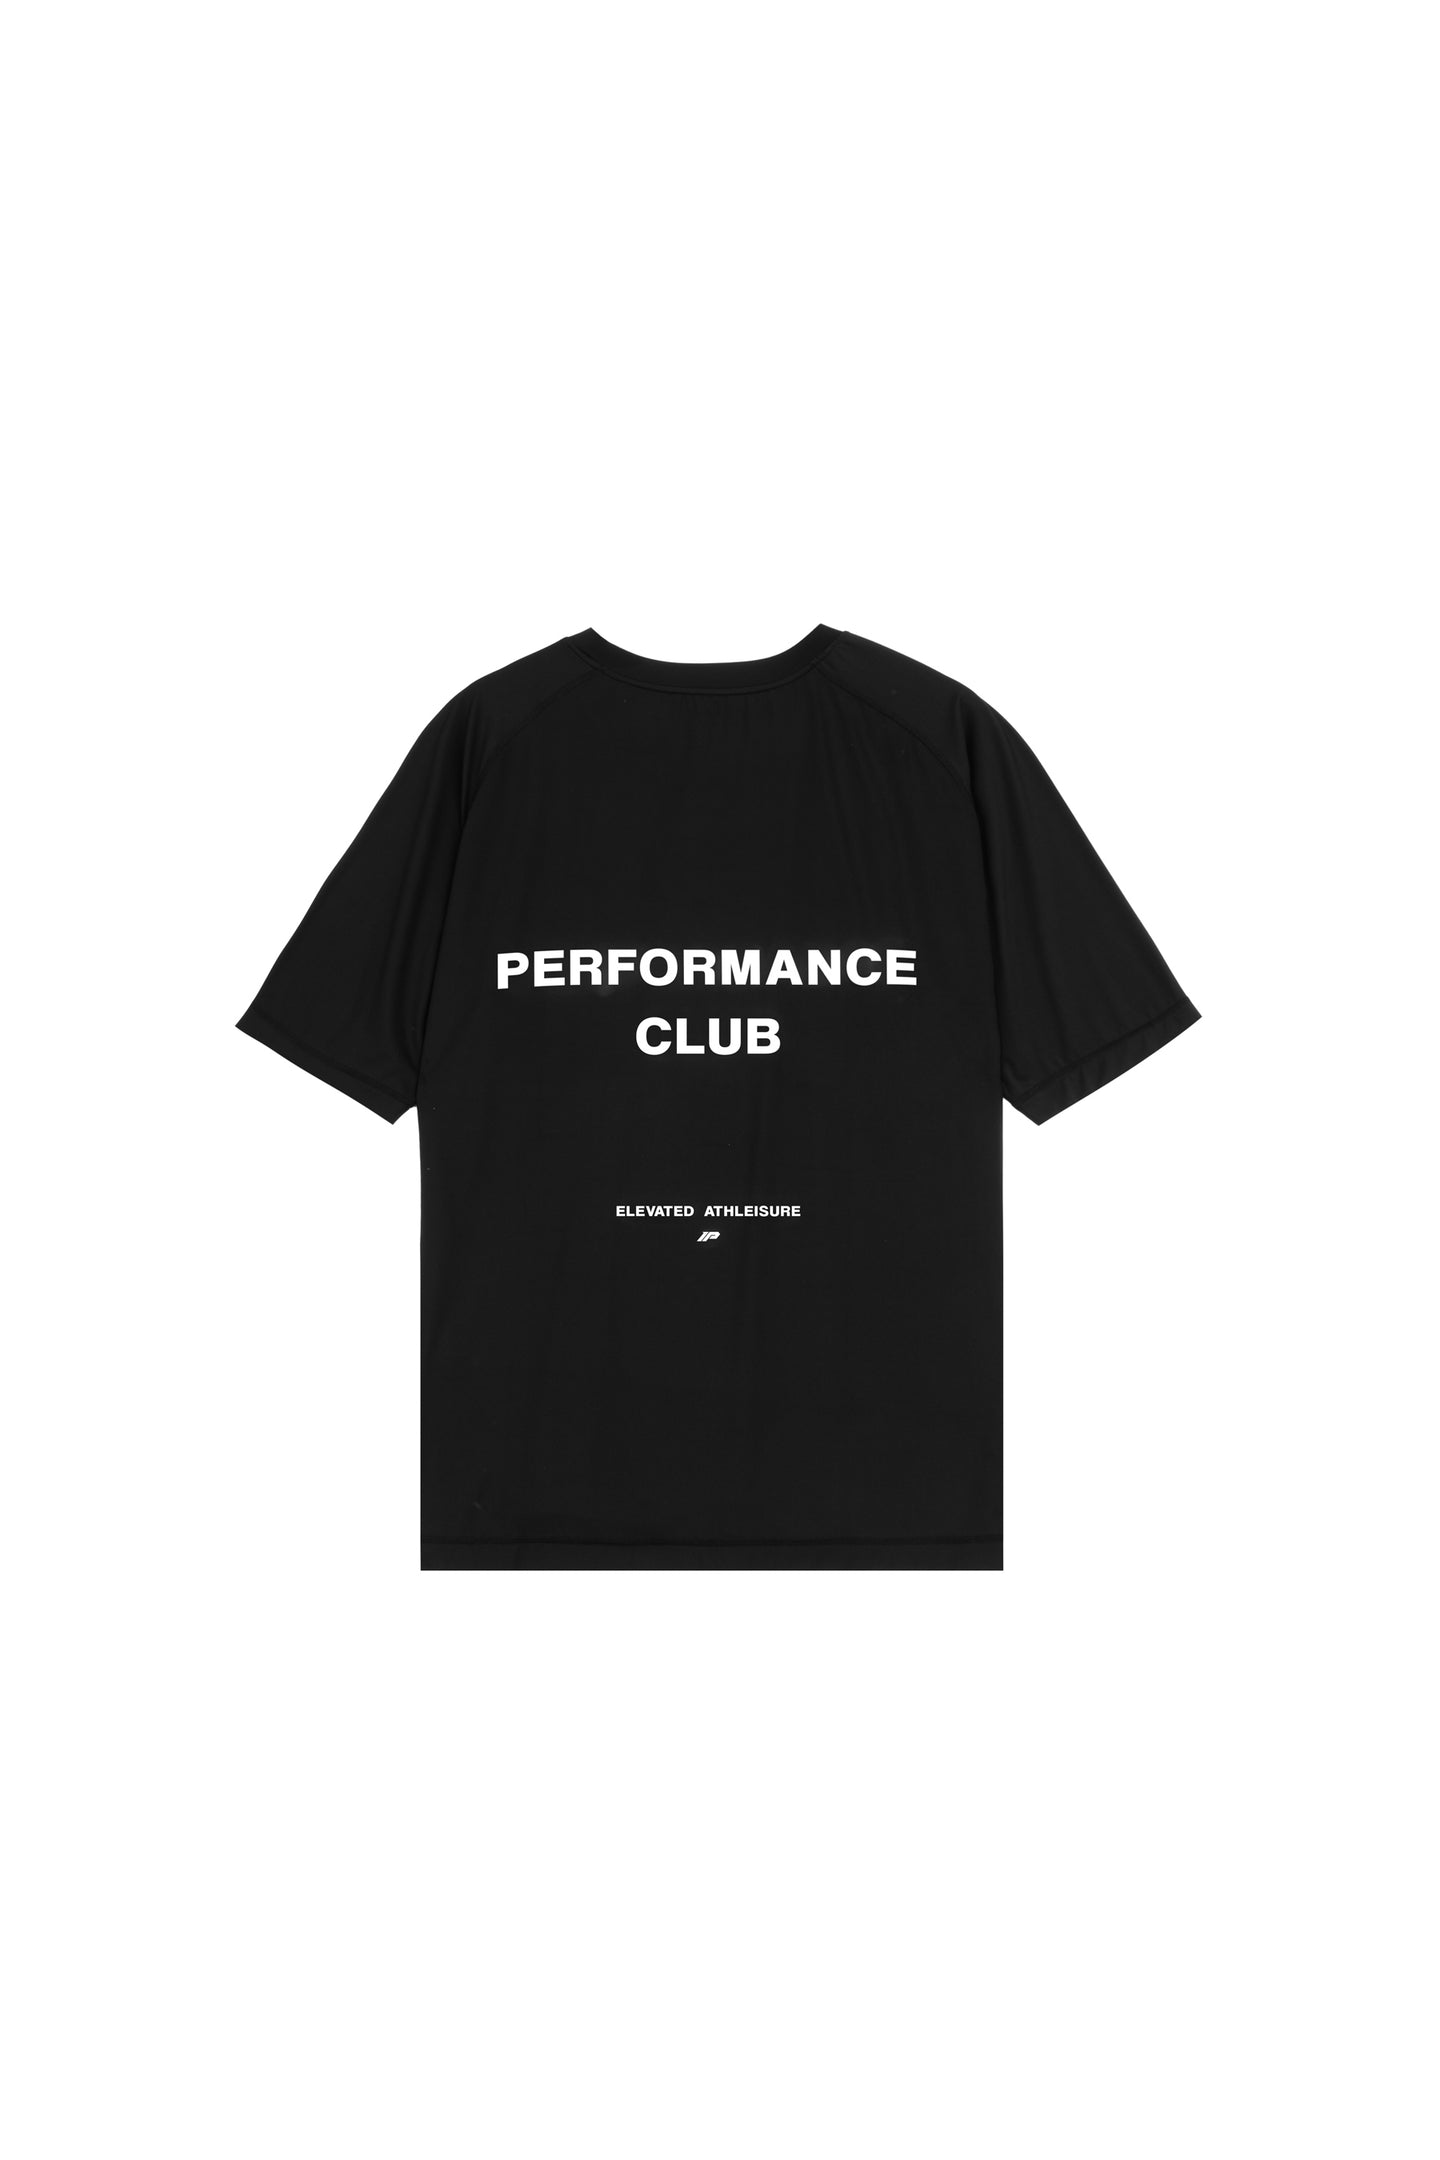 PERFORMANCE CLUB TEE - BLACK